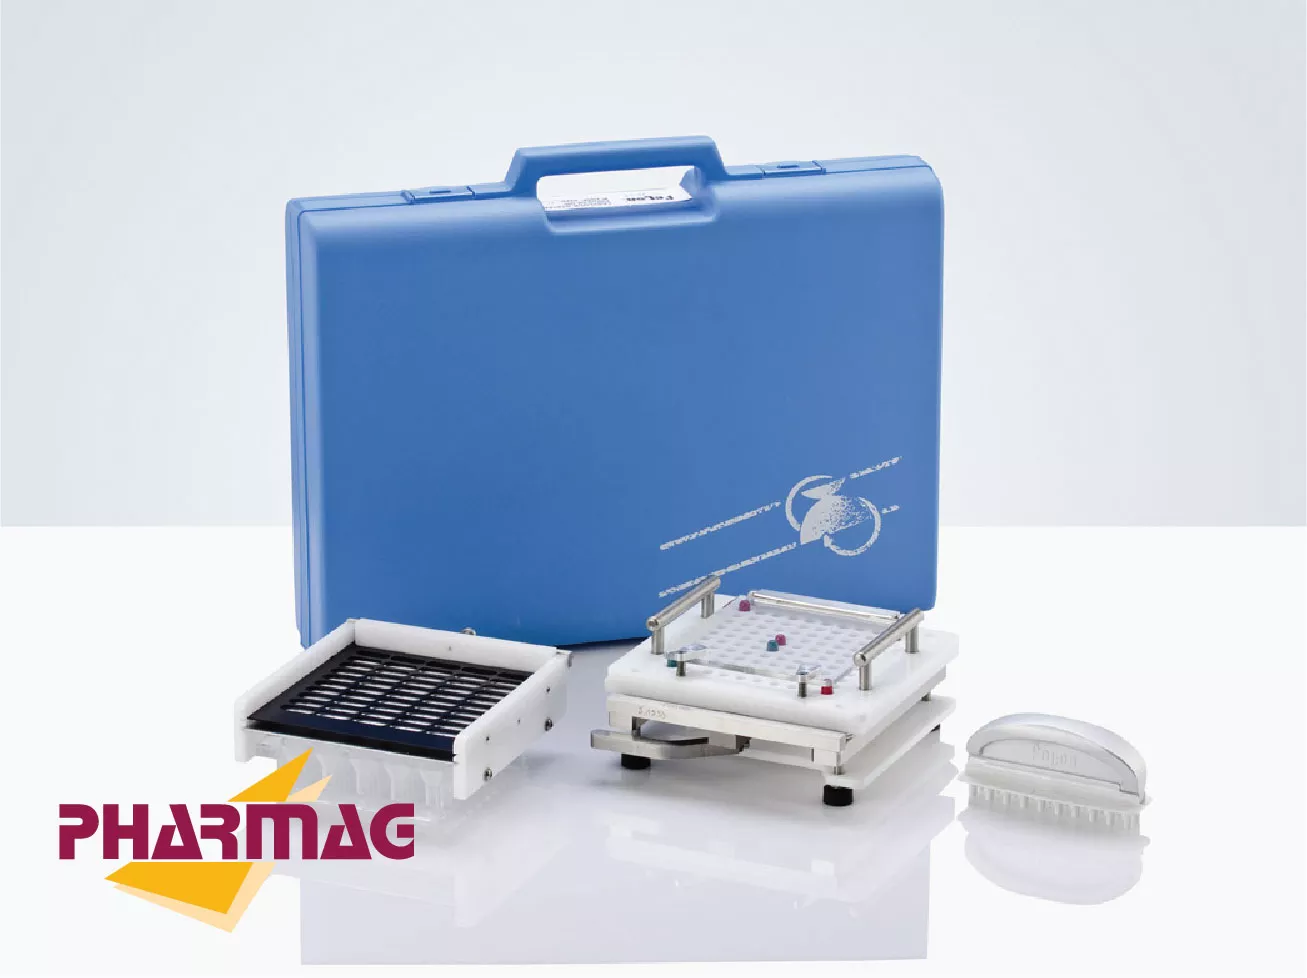 Pharmag Mini Capsulation Machines